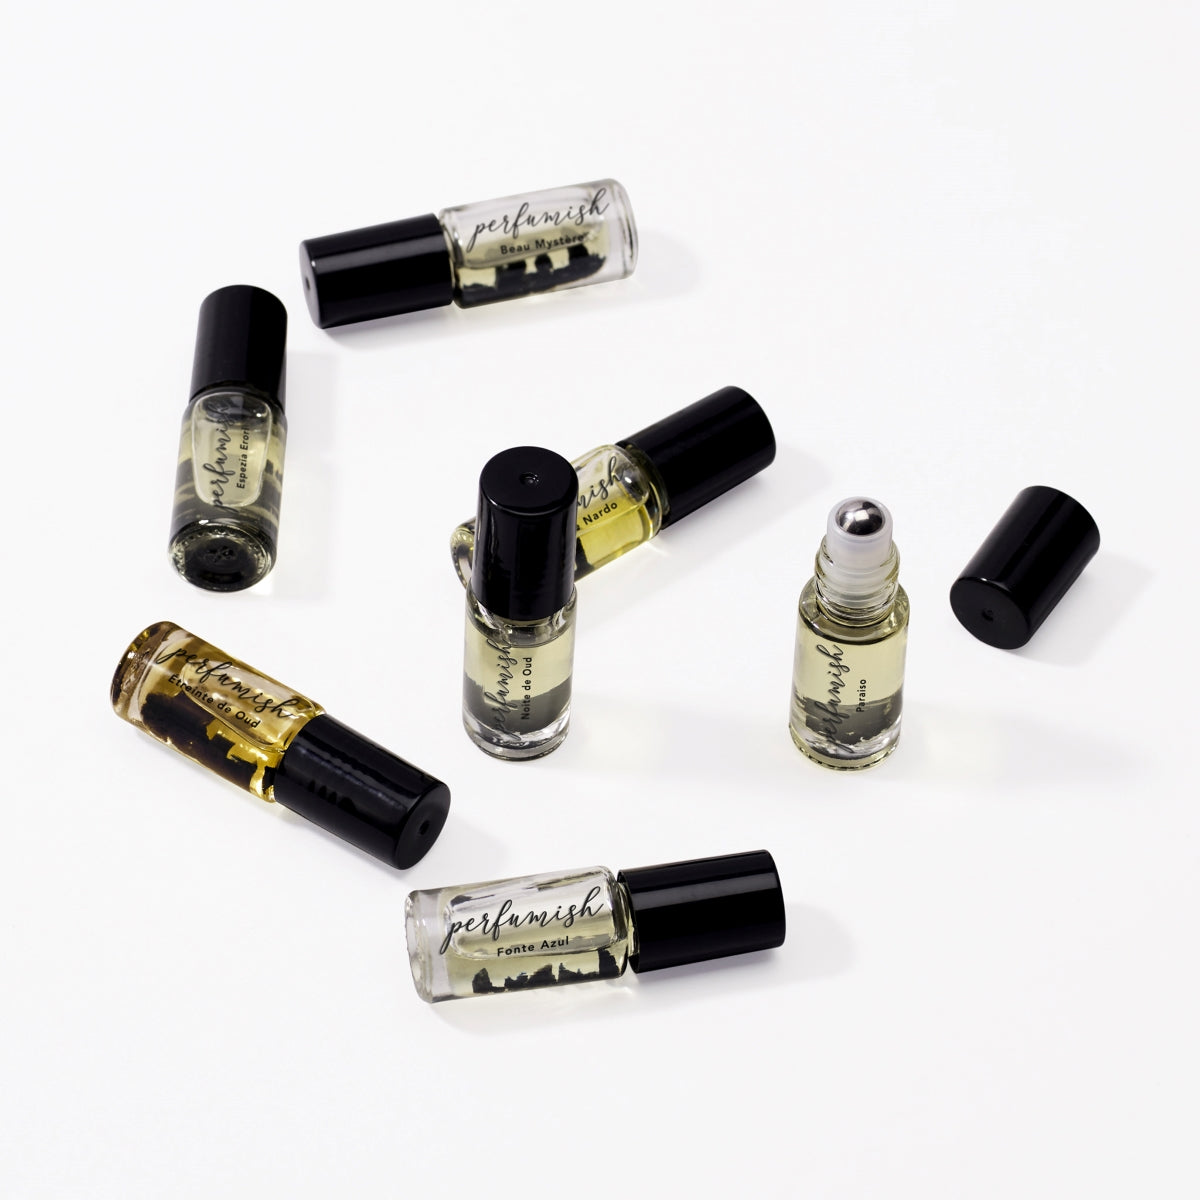 Aficionado Perfume Gift Set of Roll On Fragrances (Set of 7)